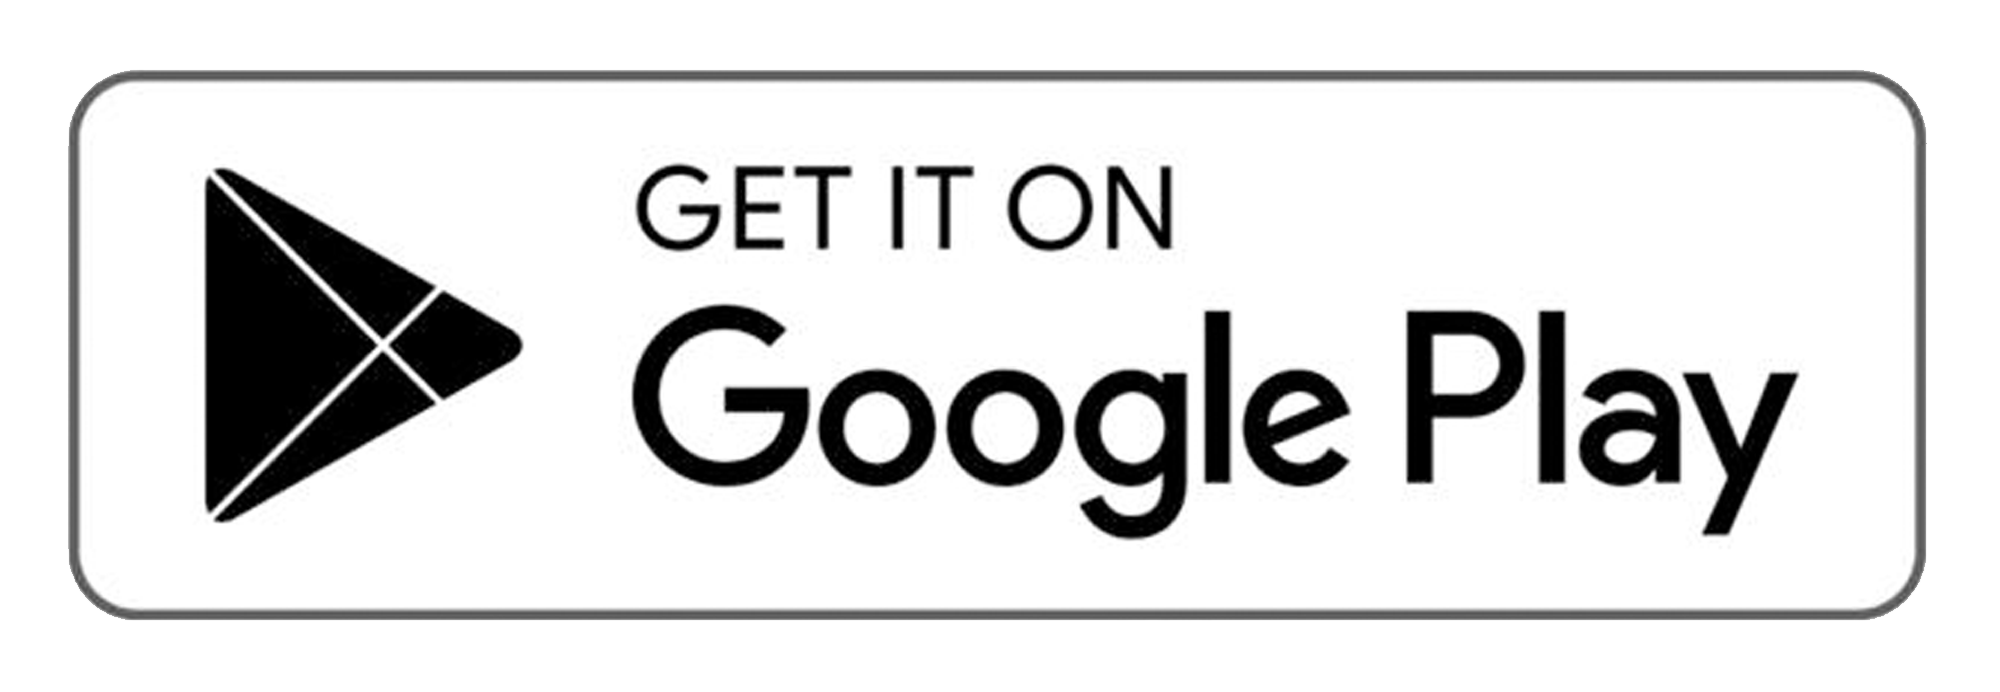 Google Play. Гугл плей лого. Доступно в гугл плей. Google Play логотип PNG.